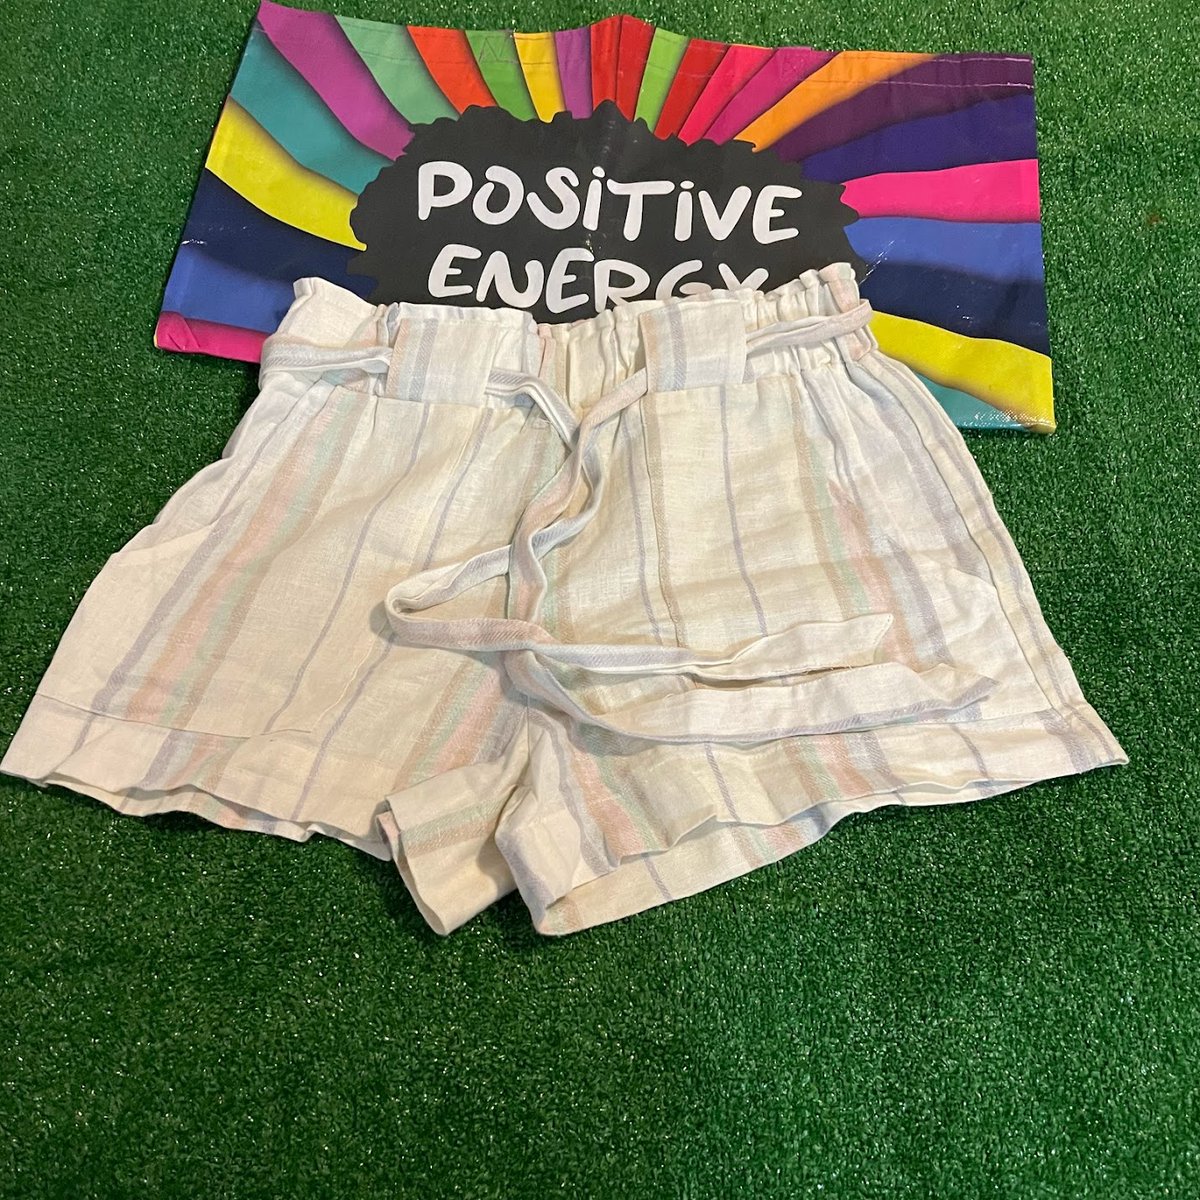 Indigo Rein Women's Paperbag High Rise Pockets Linen Blend Stripes Shorts Size L

#IndigoReinFashion
#PaperbagShorts
#HighRiseStyle
#LinenBlend
#StripedShorts
#SizeLFashion
#SummerFashion
#PocketsStyle
#CasualChic
#FashionComfort

ebay.com/itm/1262782715…